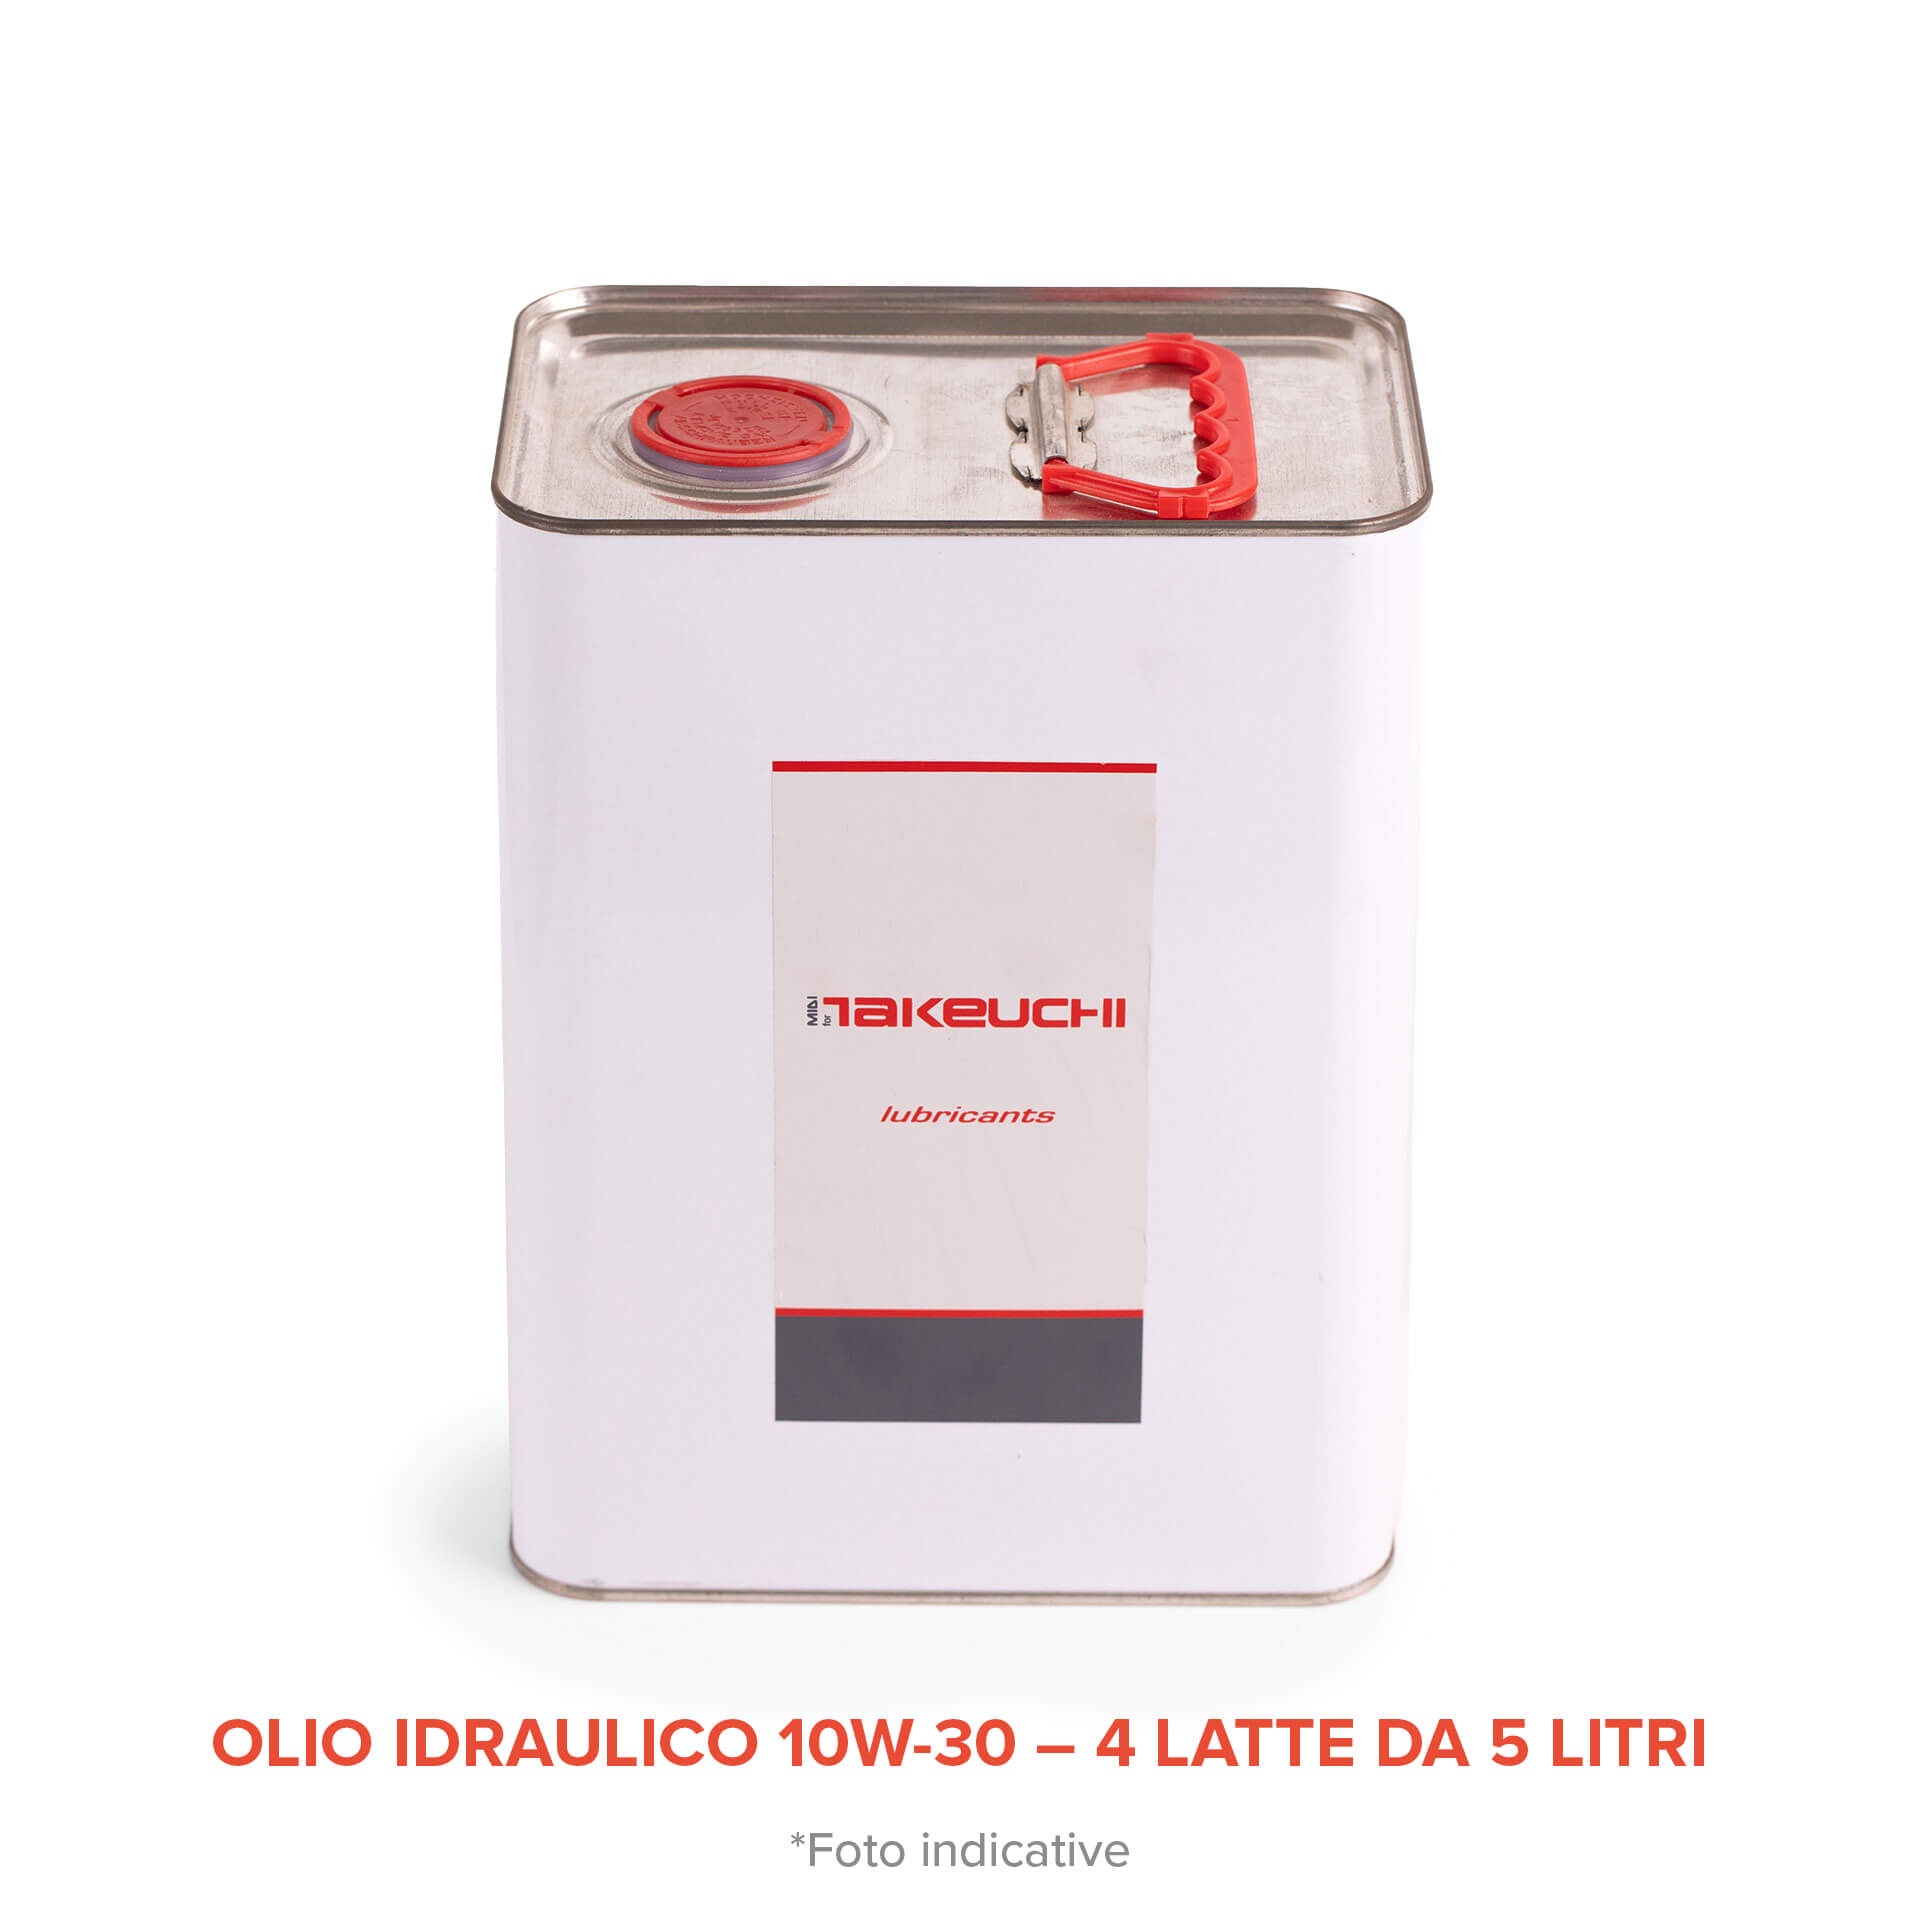 Takeuchi - Olio idraulico 10W-30 - 4 latte da 5 litri – Ar.An.